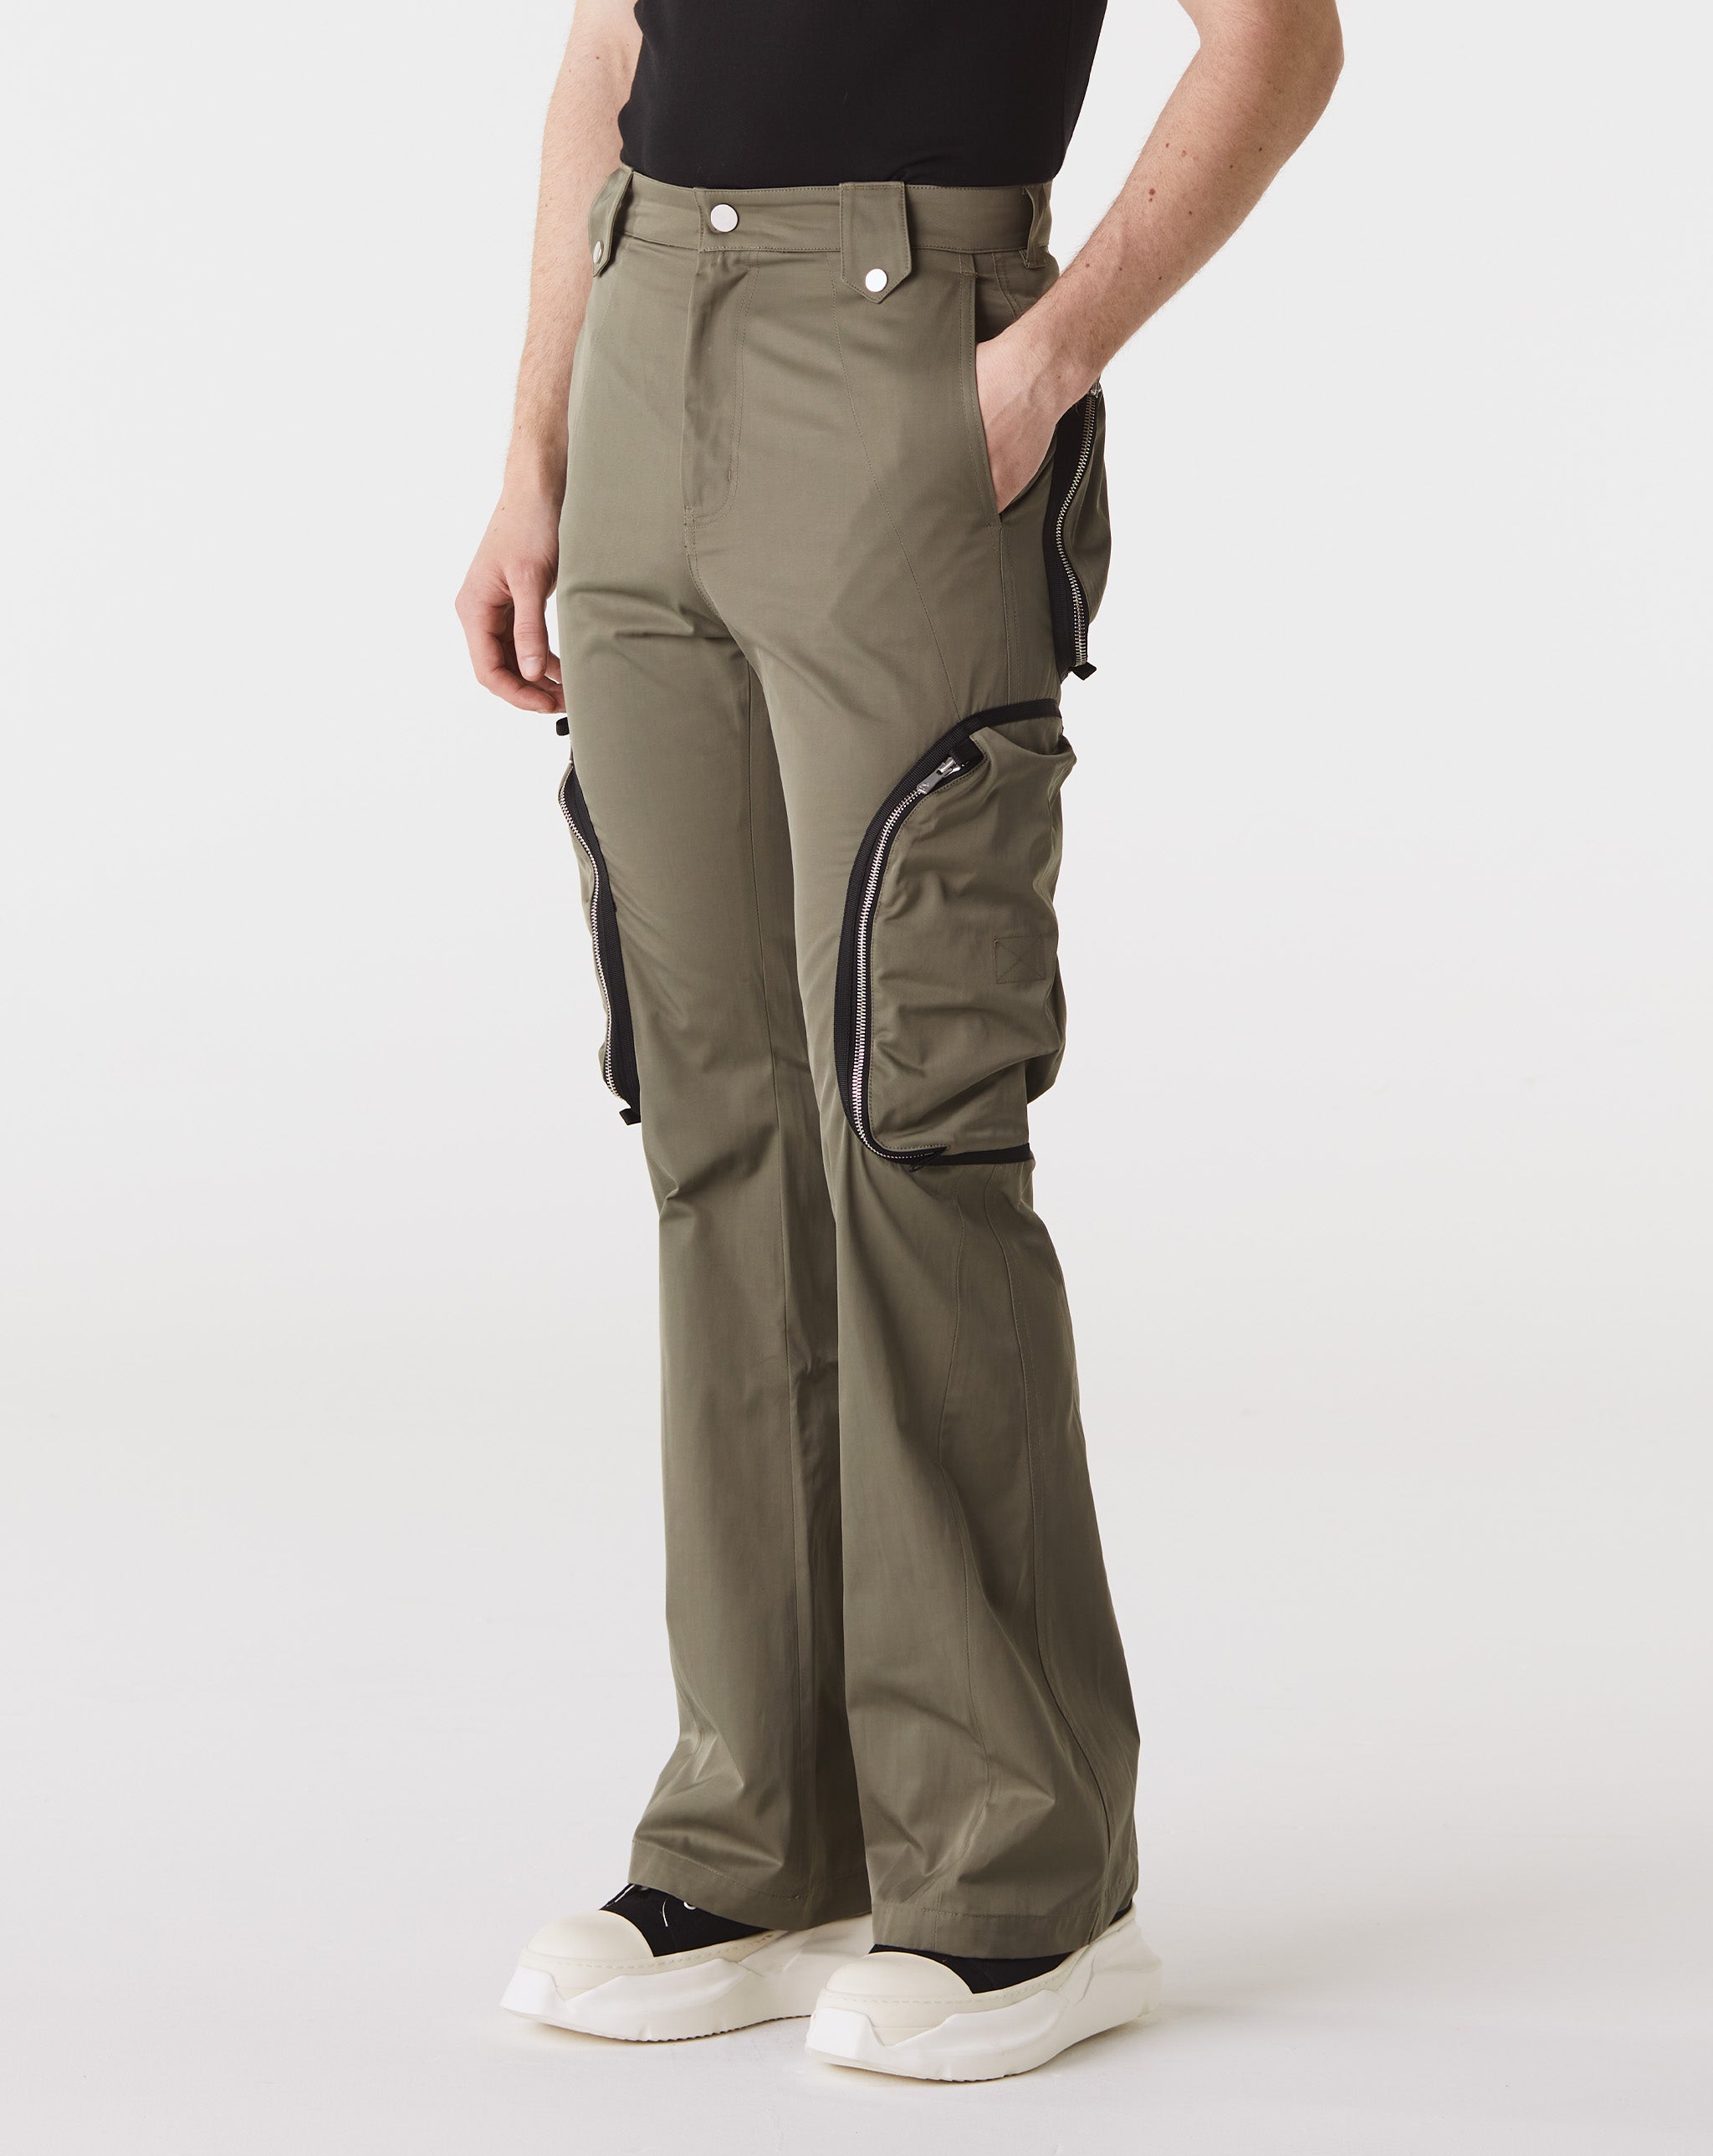 FFFPOSTALSERVICE monse grey camouflage jeans  - Cheap Cerbe Jordan outlet